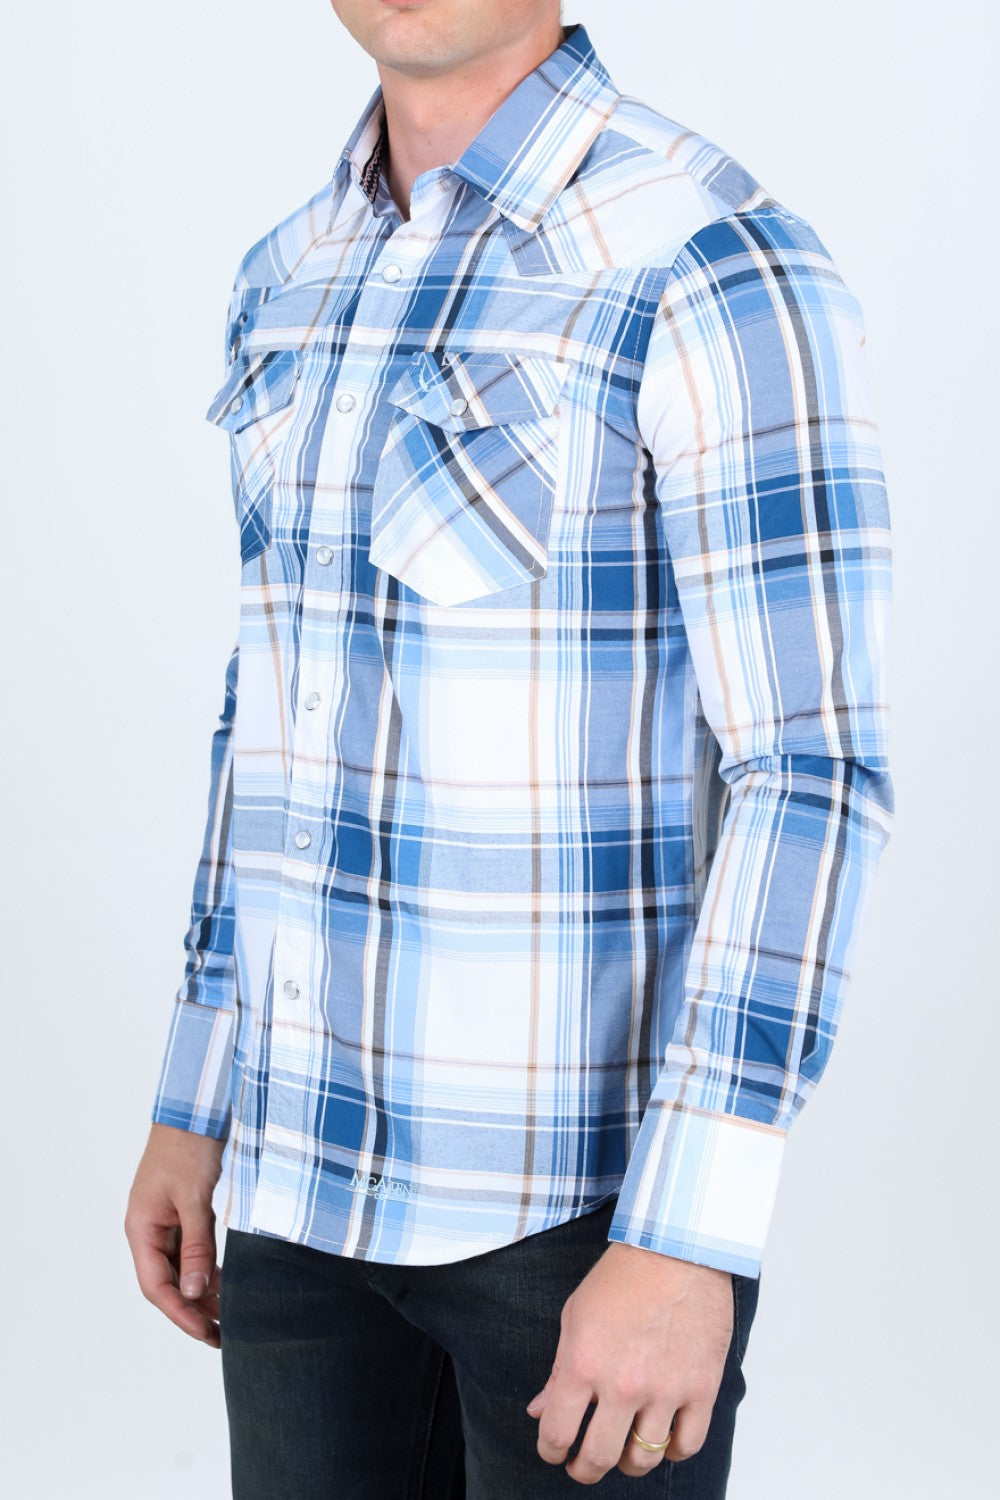 Camisa de Cuadros Azul MC-200-53 - Camisas Vaqueras de Manga Larga para Hombre - Camisas Vaqueras Azul (3)